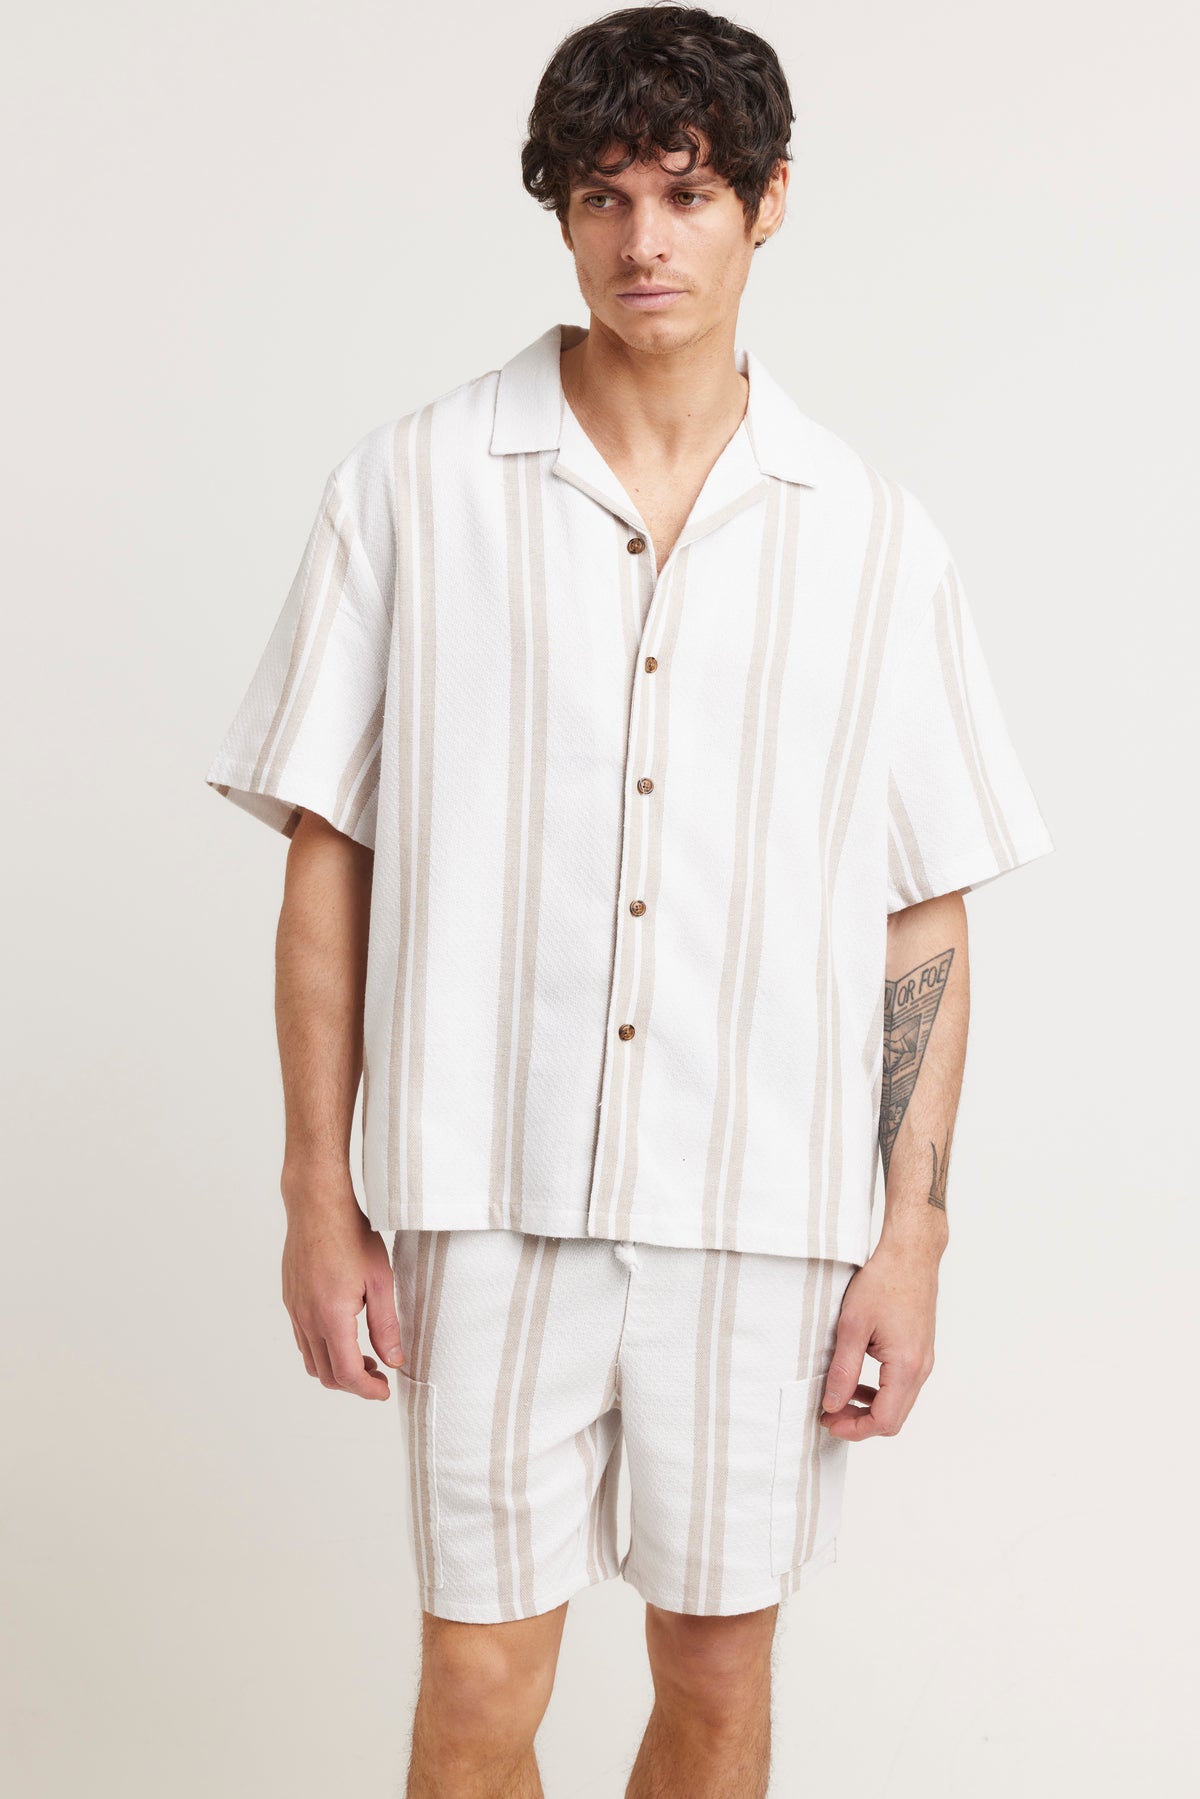 Capri Cotton Shirt Beige Stripe - FINAL SALE